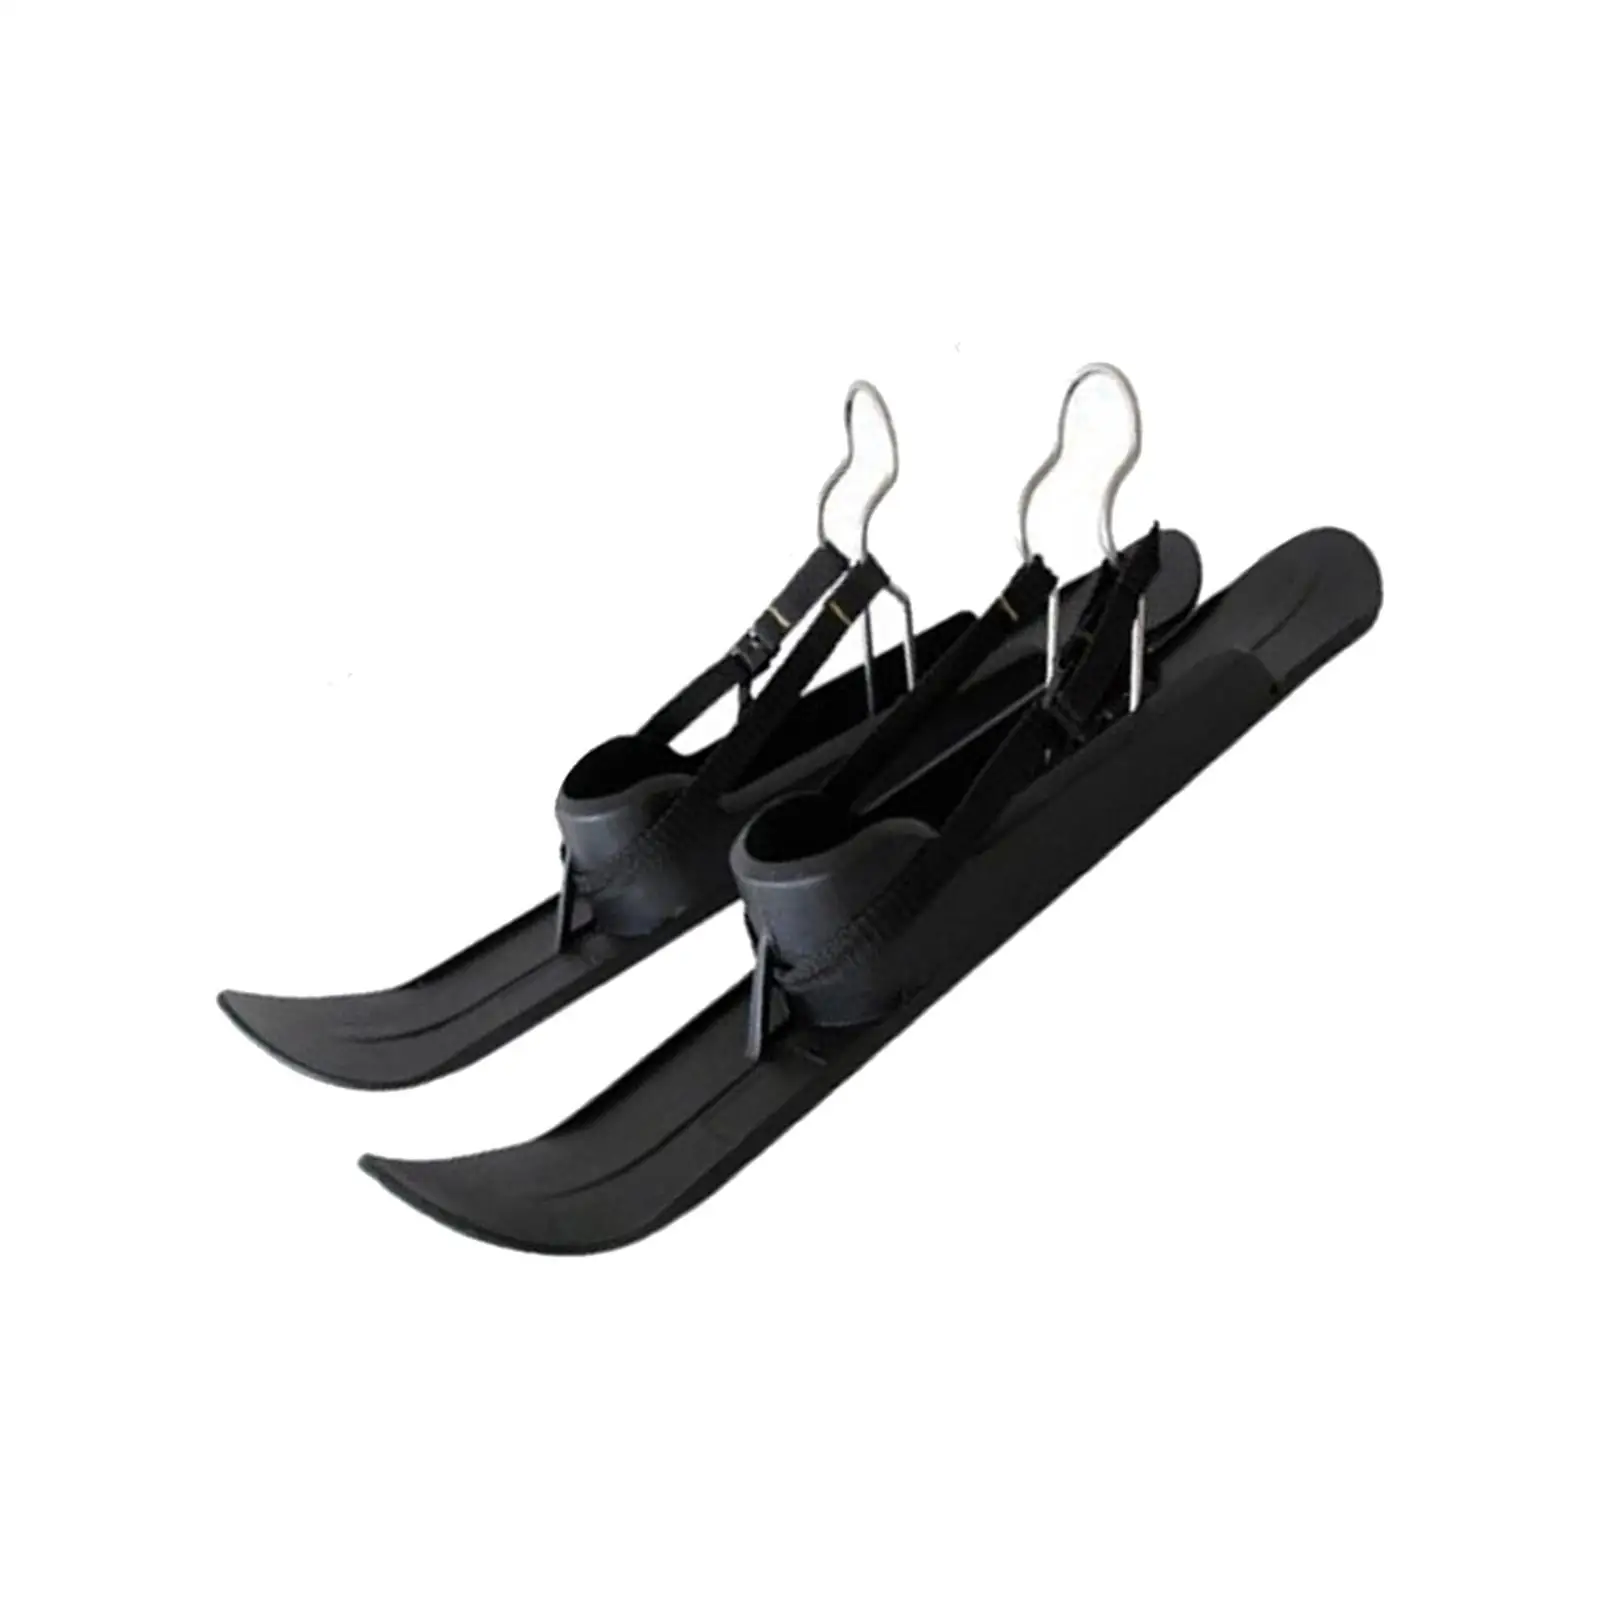 Snow Sled Board Glider Ski Plate Toboggan for Balance Bikes